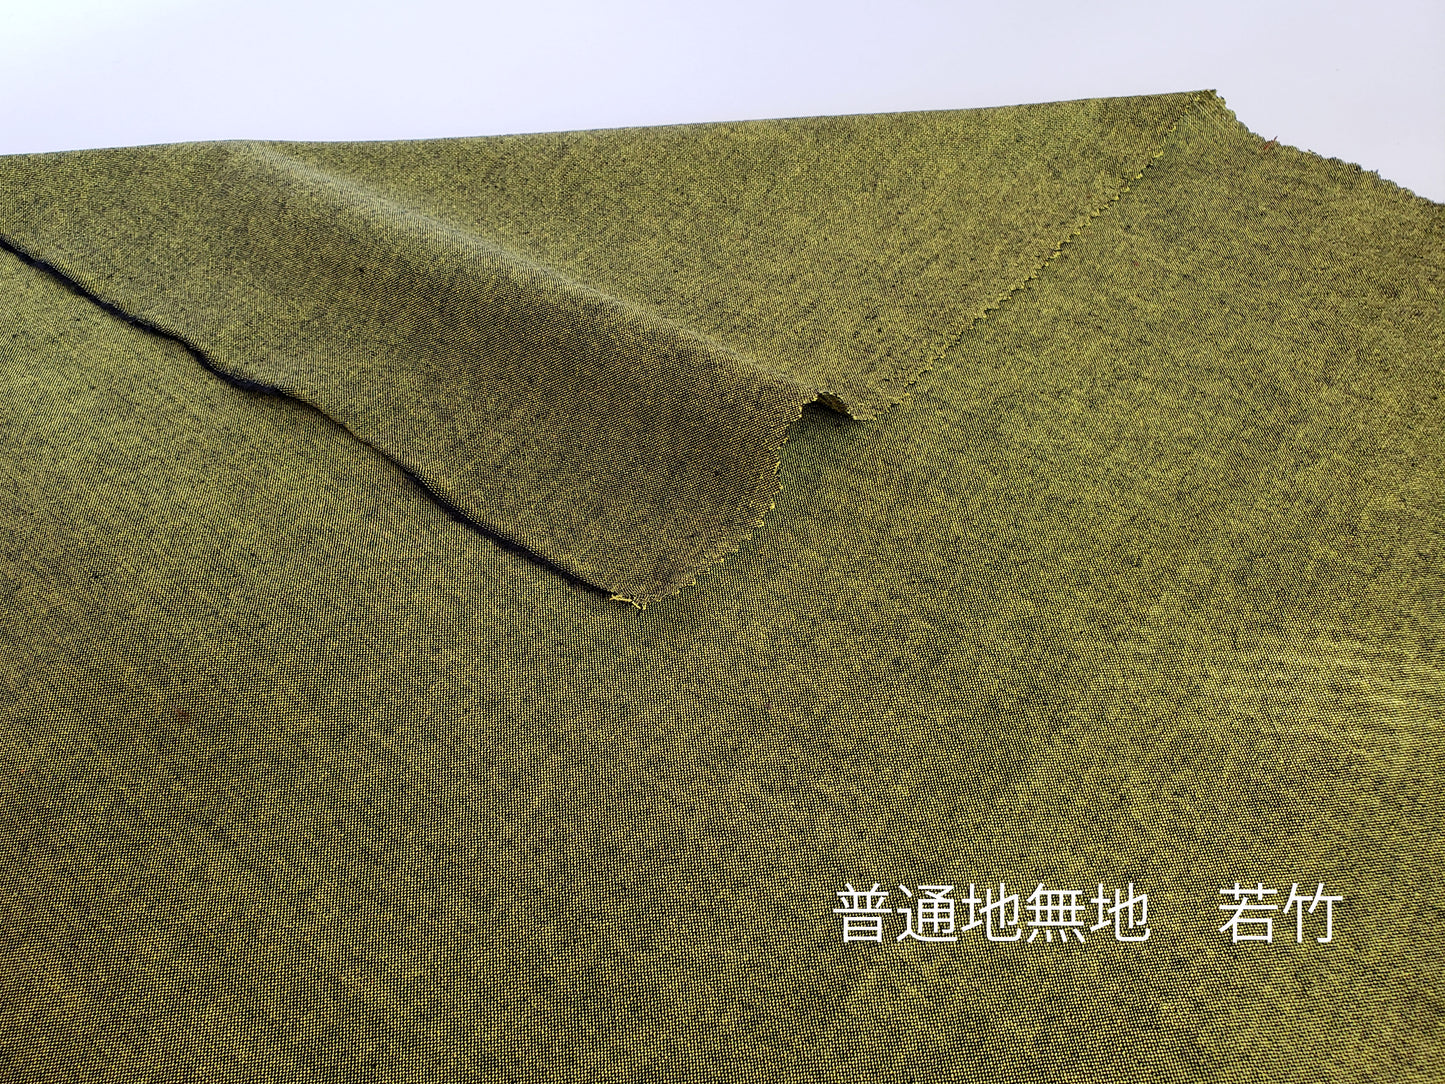 Kameda striped cotton fabric plain plain off slab Yamabuki Wakatake